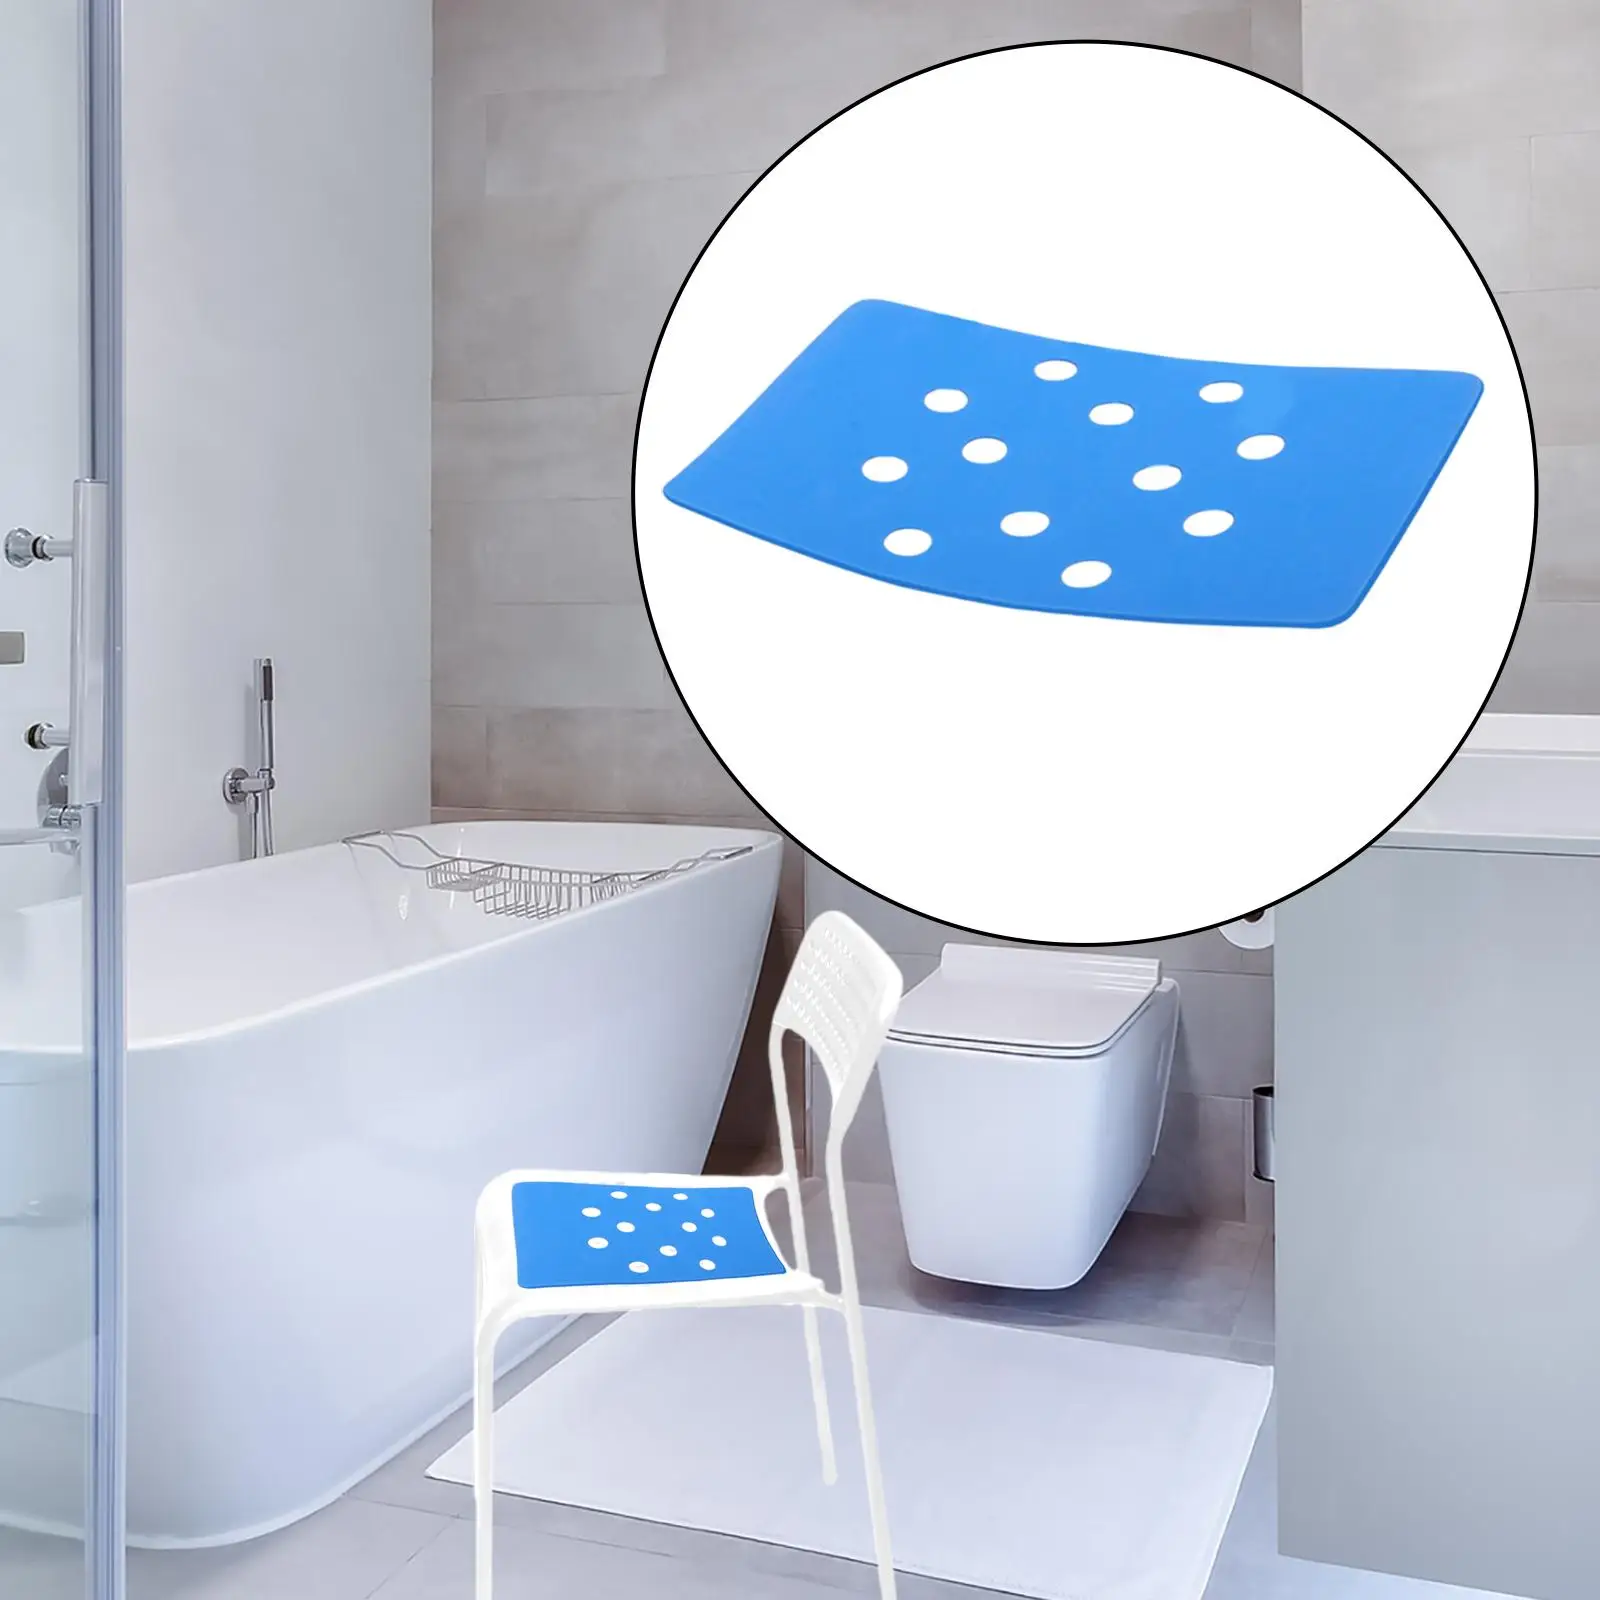 Bath Shower Stool Seat   Accessories Fit Bath Bench EVA Foam  for Elderly Senior 13.8x9.5 Inches -Blue